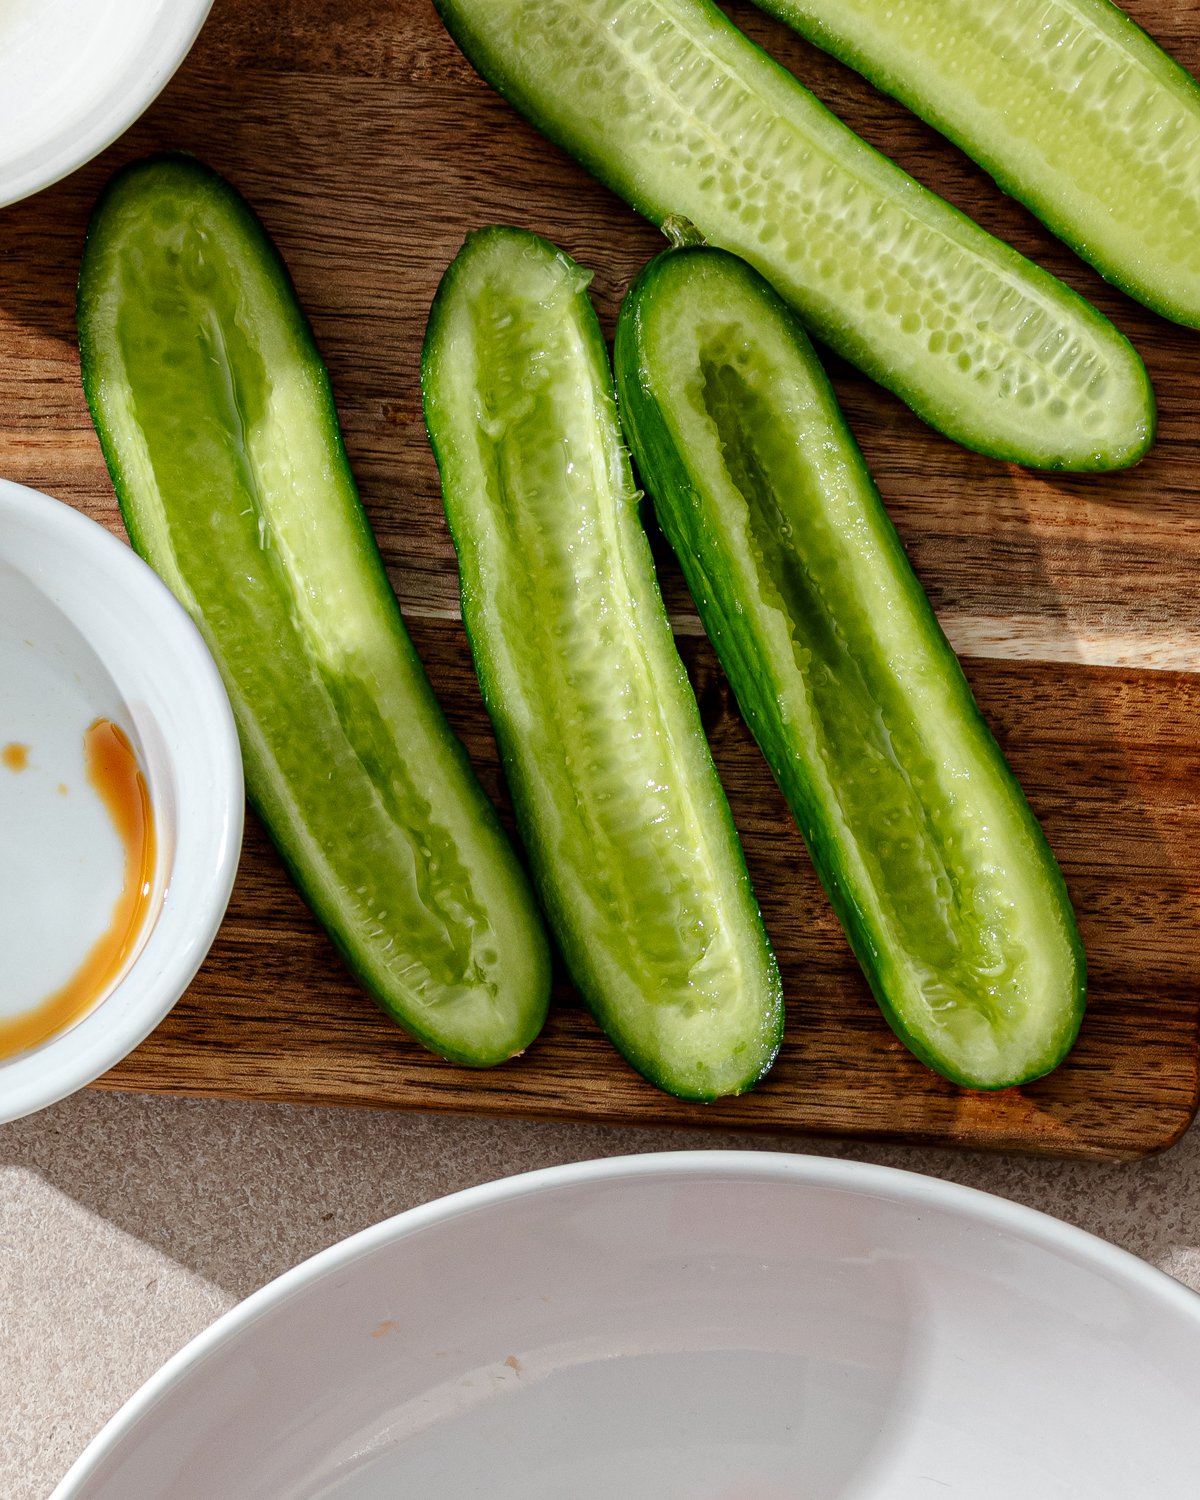 Hollowed cucumbers for cucumber sushi boats recipe.